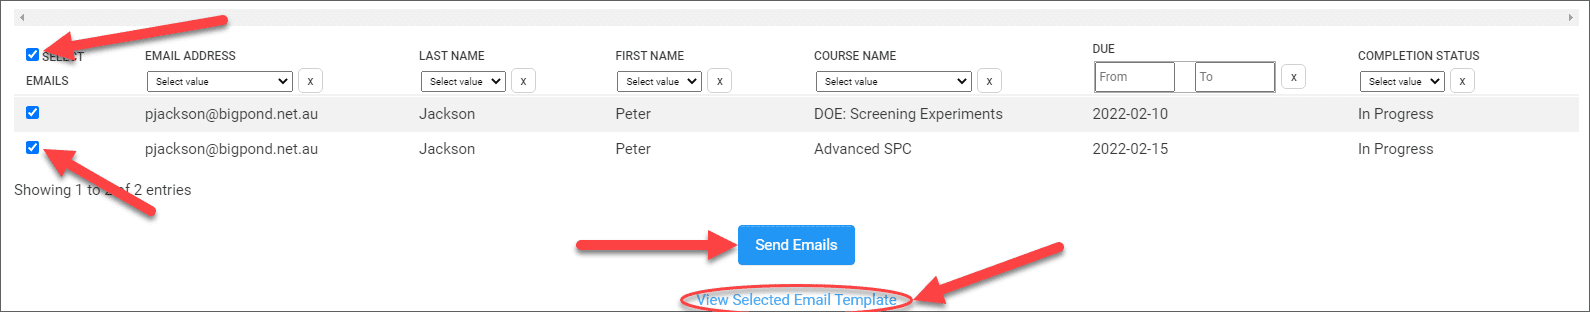 QualityTrainingPortal Admin Email Reminder 2 Weeks Easy-1